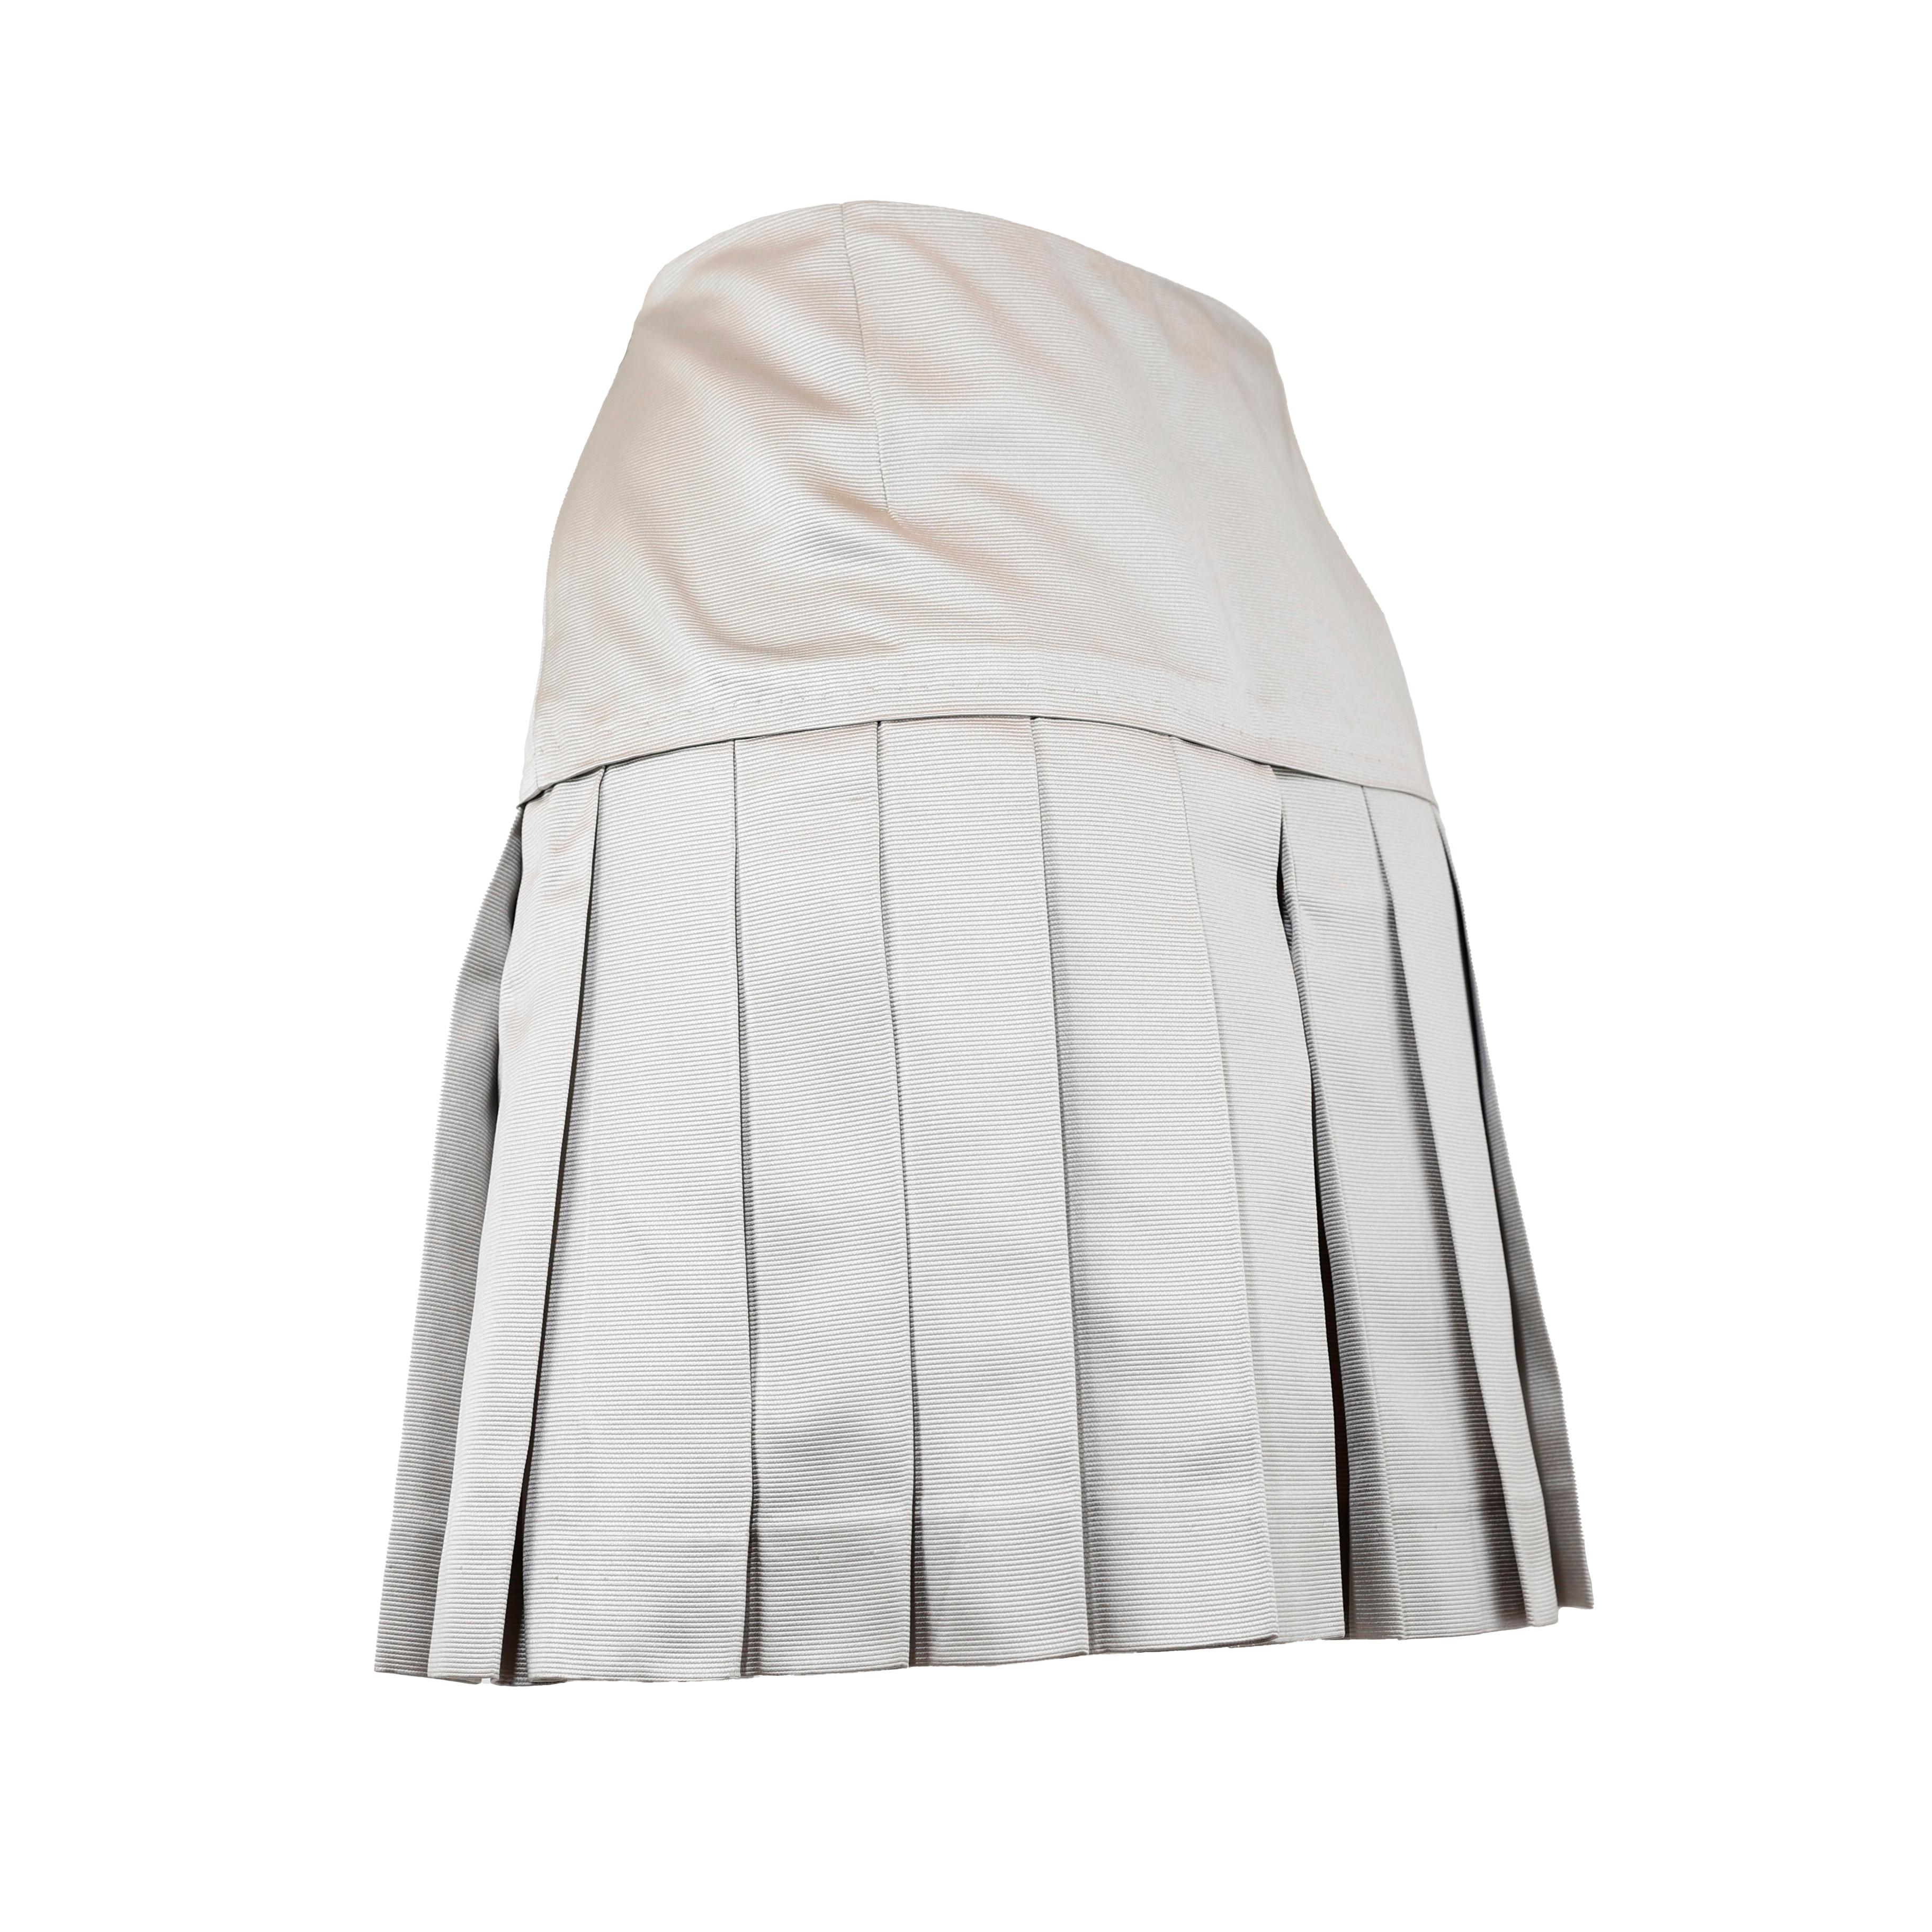 Miu Miu mini Skirt in sil In Excellent Condition For Sale In Bressanone, IT